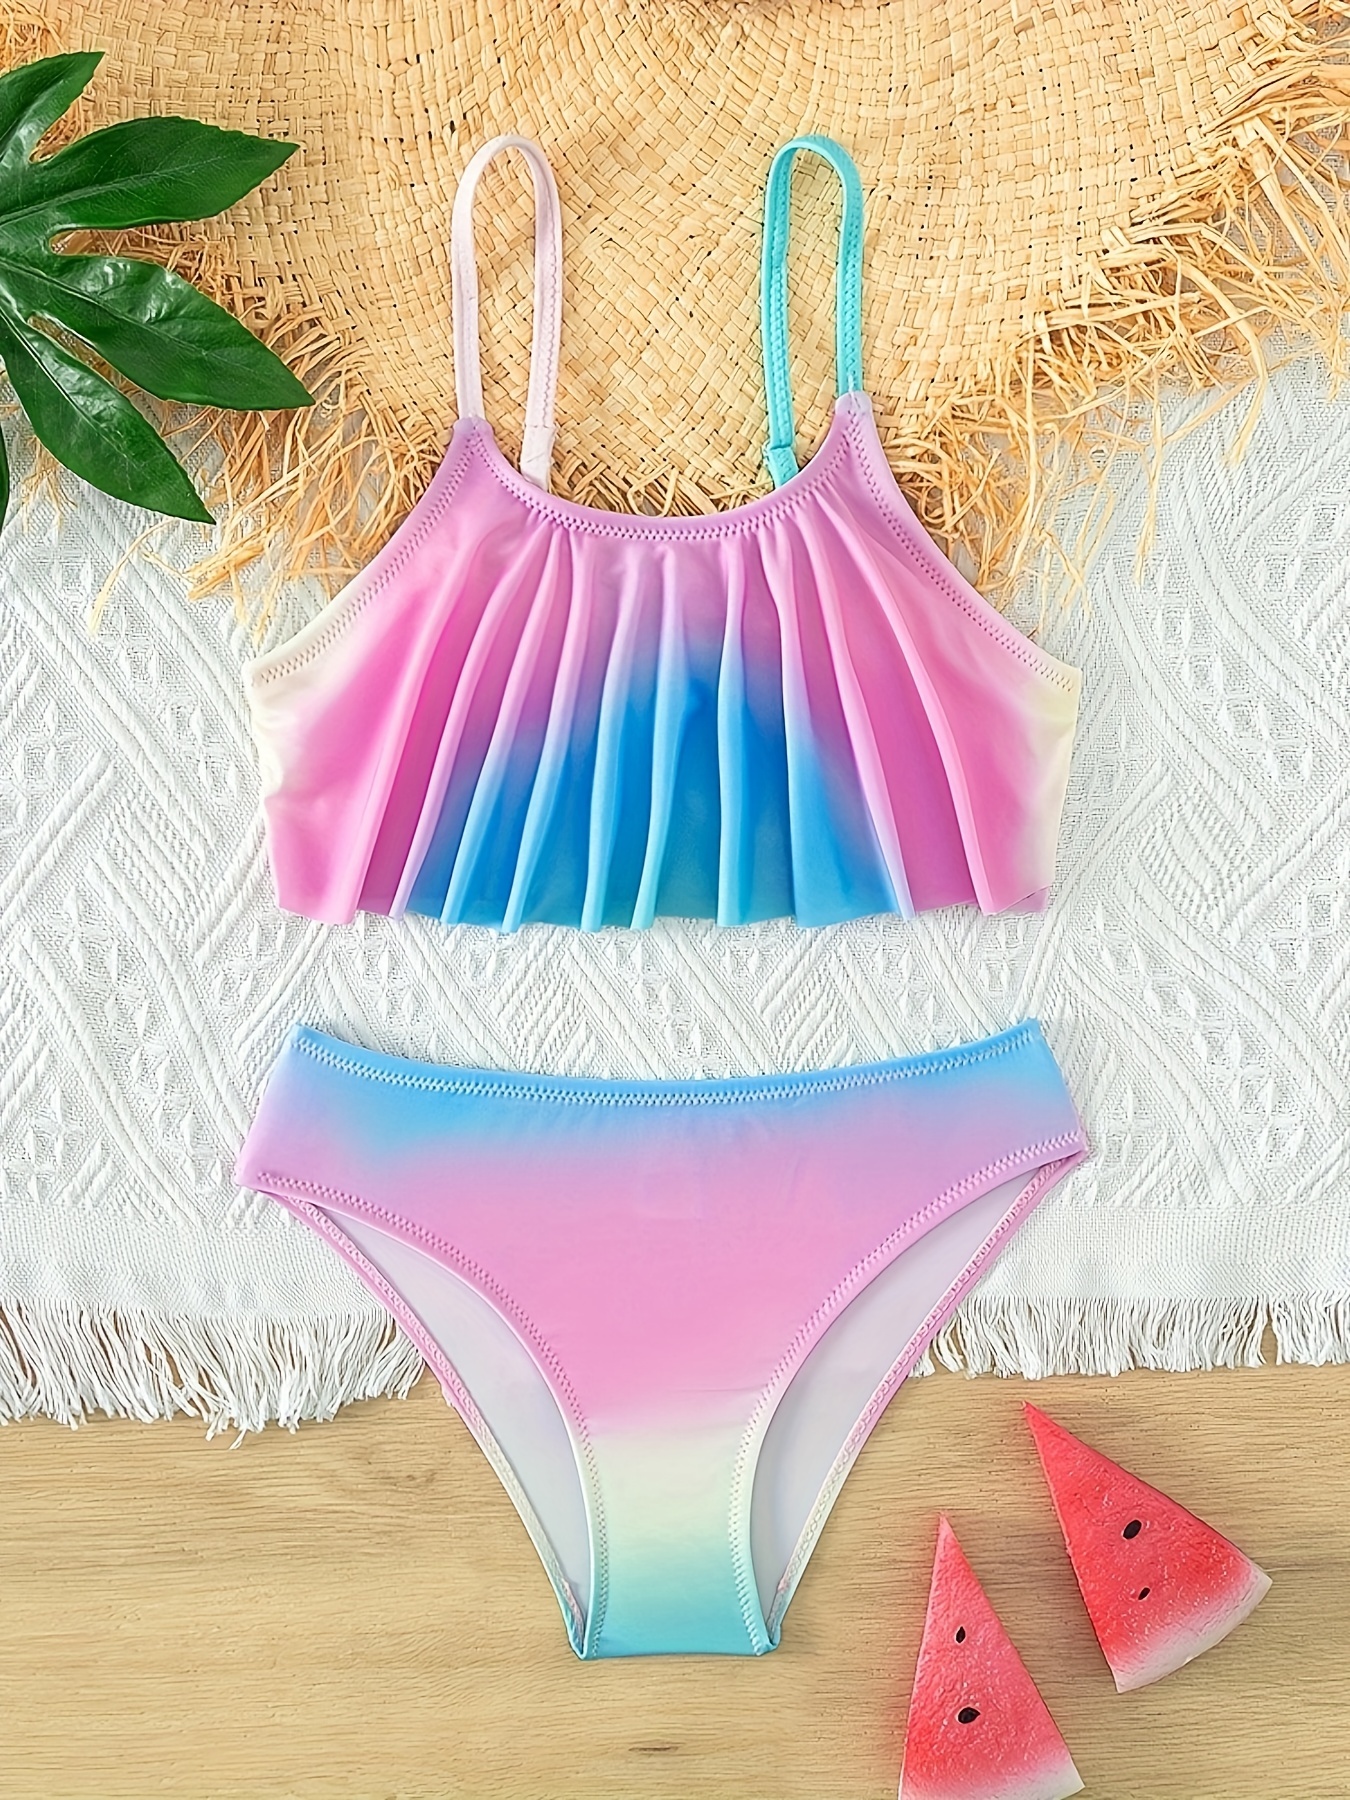 Girls Two Piece Swimsuits, Kids Flamingo Hawaiian Ins Bikini, Tropical Printing Beach Bathing Suit for Vacation | IKALI Costume 8-9 Years